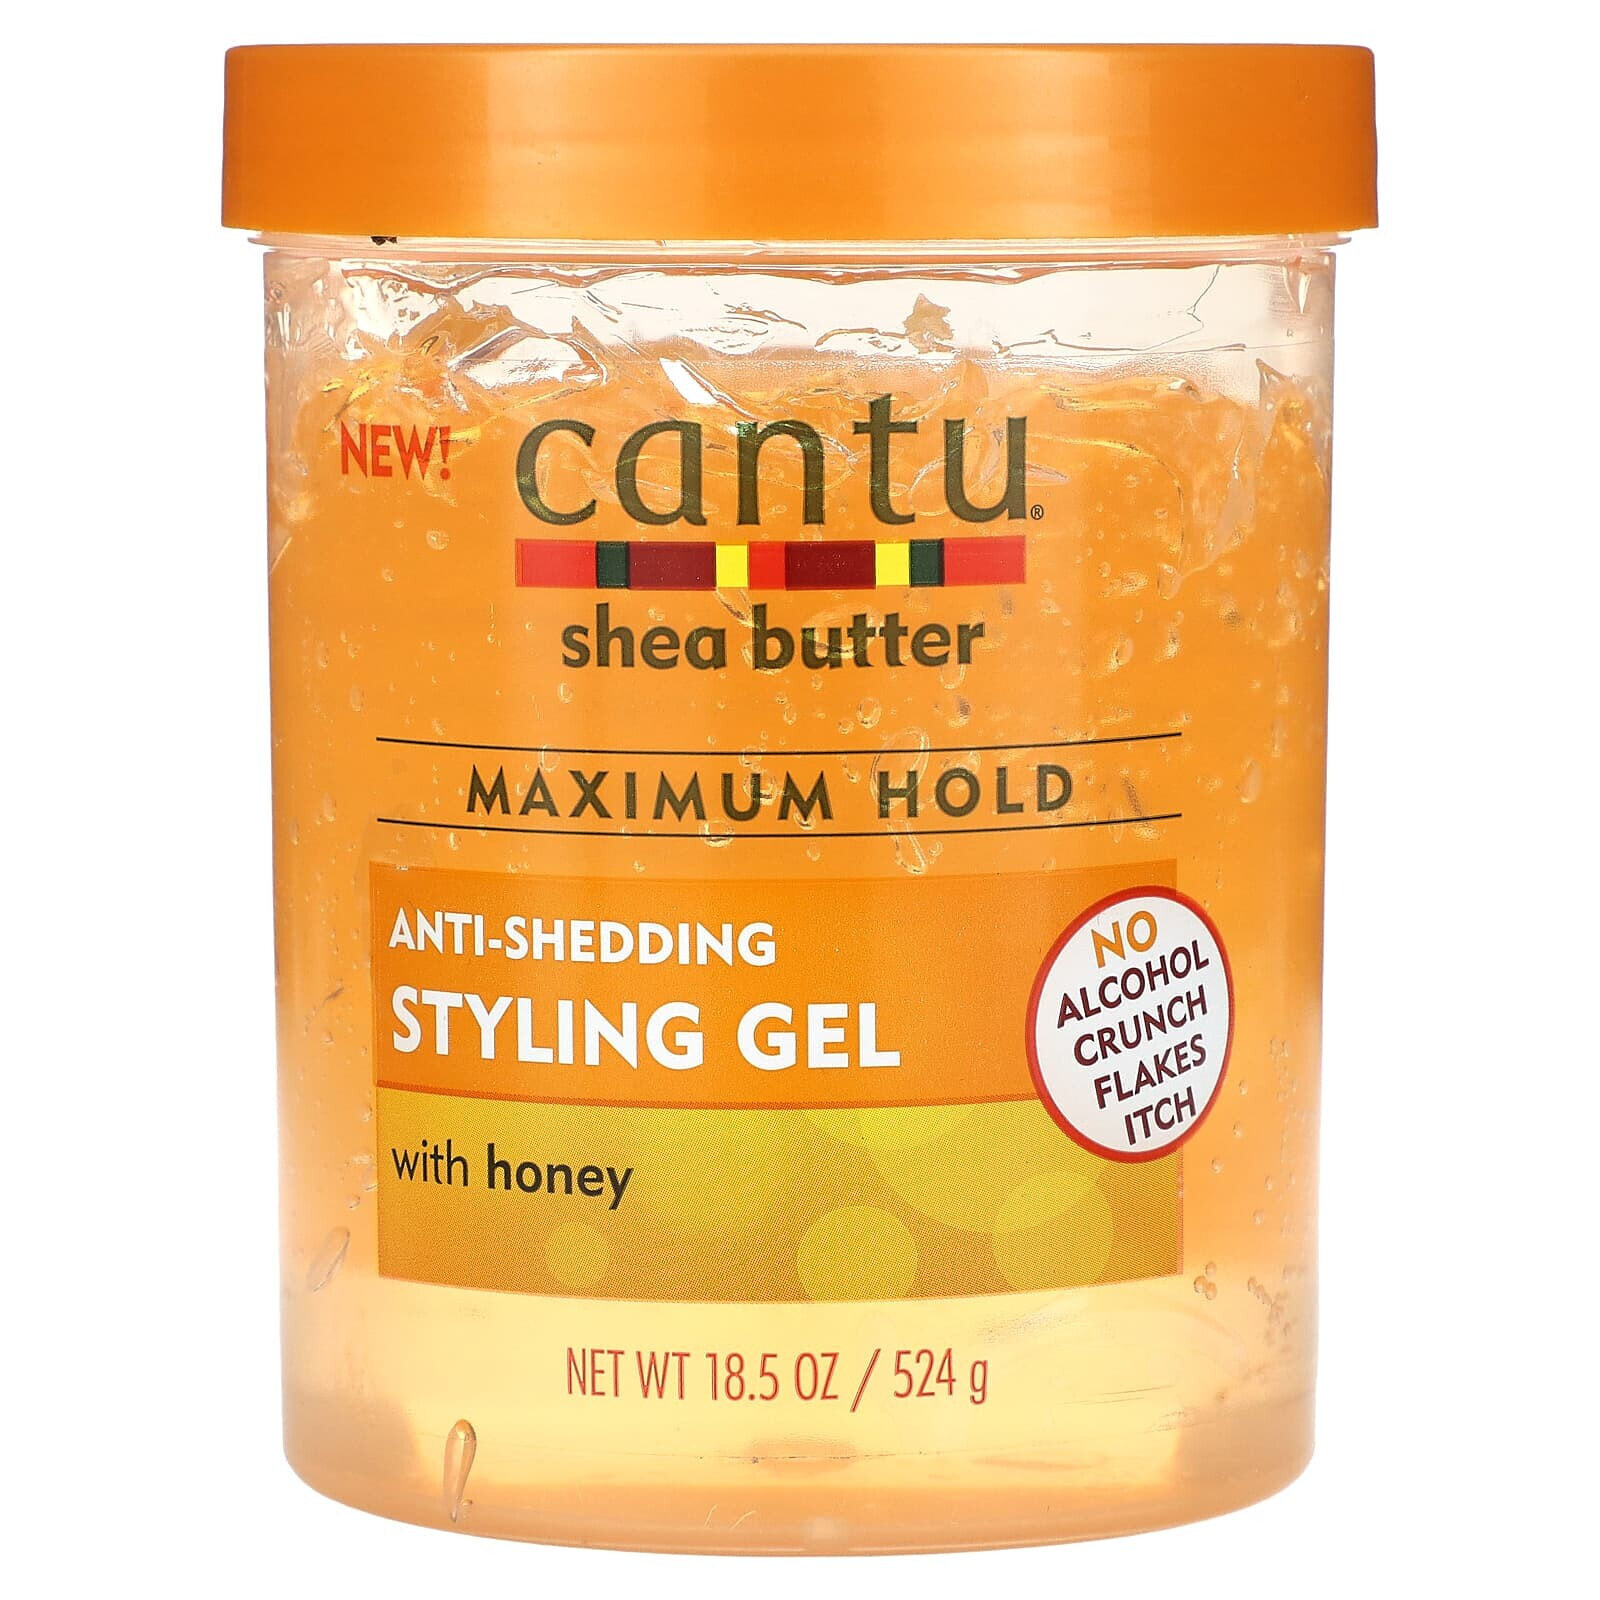 Shea Butter, Anti-Shedding Styling Gel, With Honey, Maximum Hold, 18.5 oz (524 g)